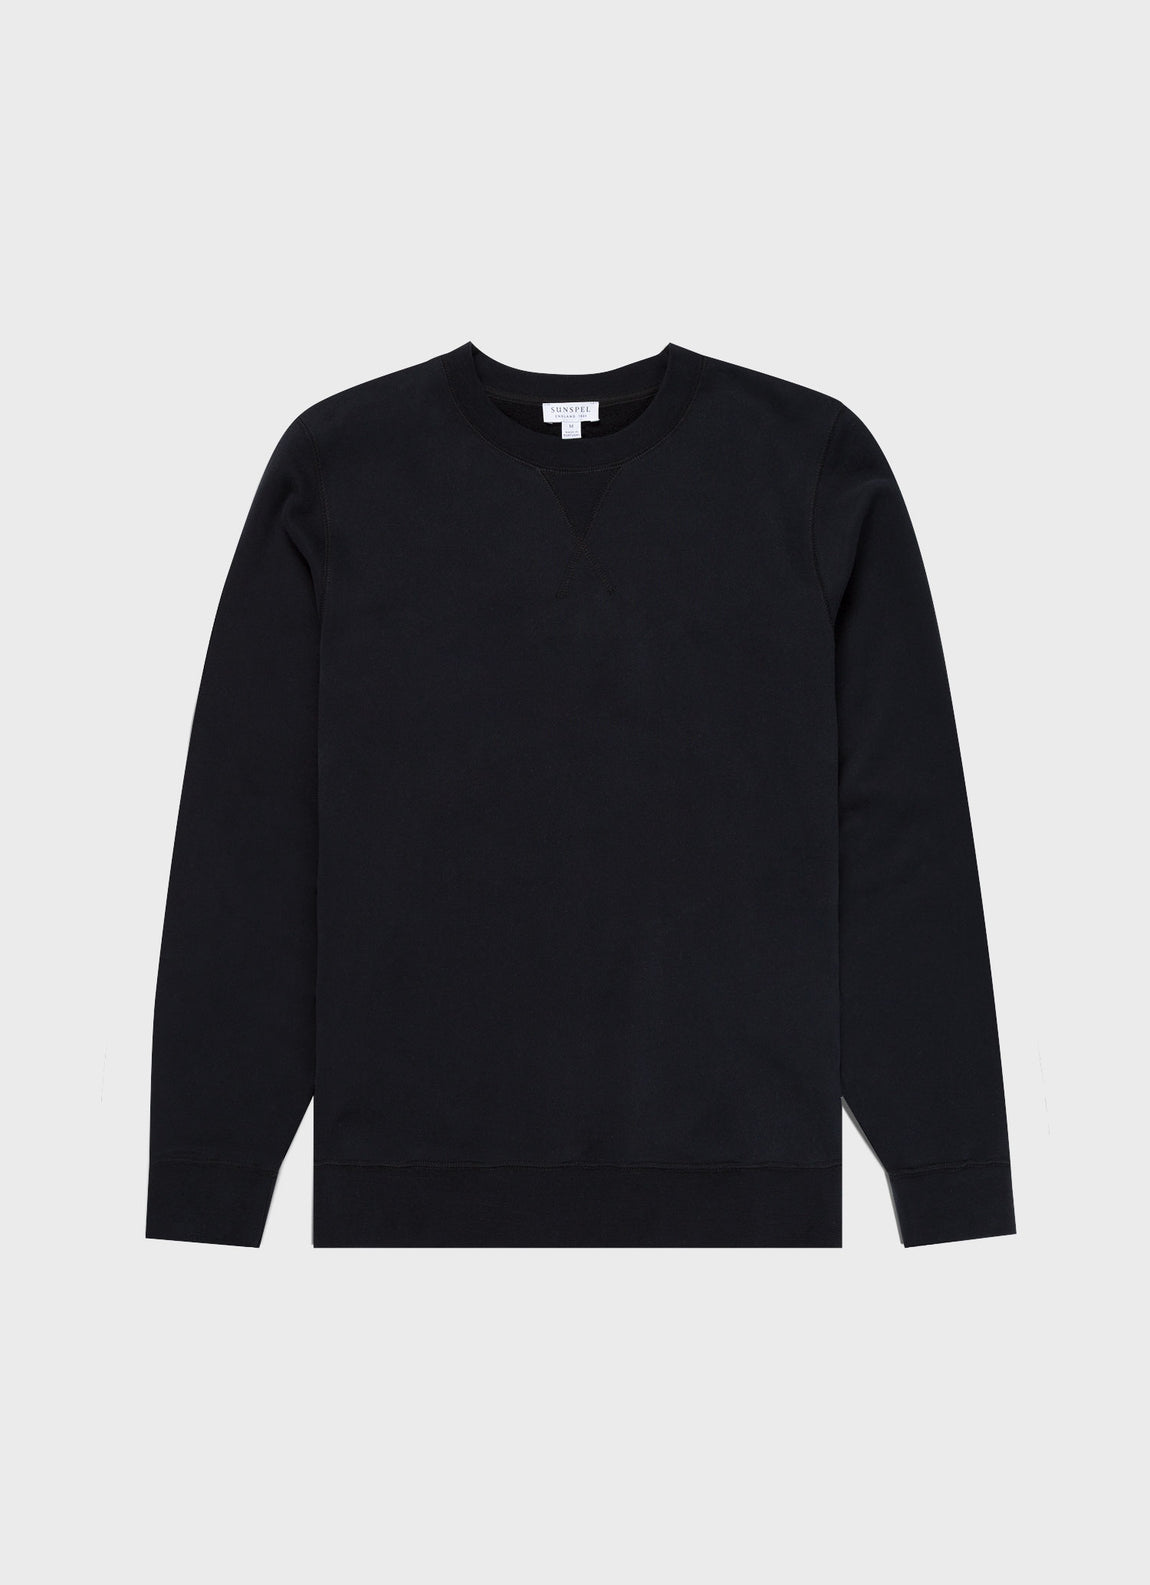 Men's Cotton Loopback Sweatshirt in Black | Sunspel